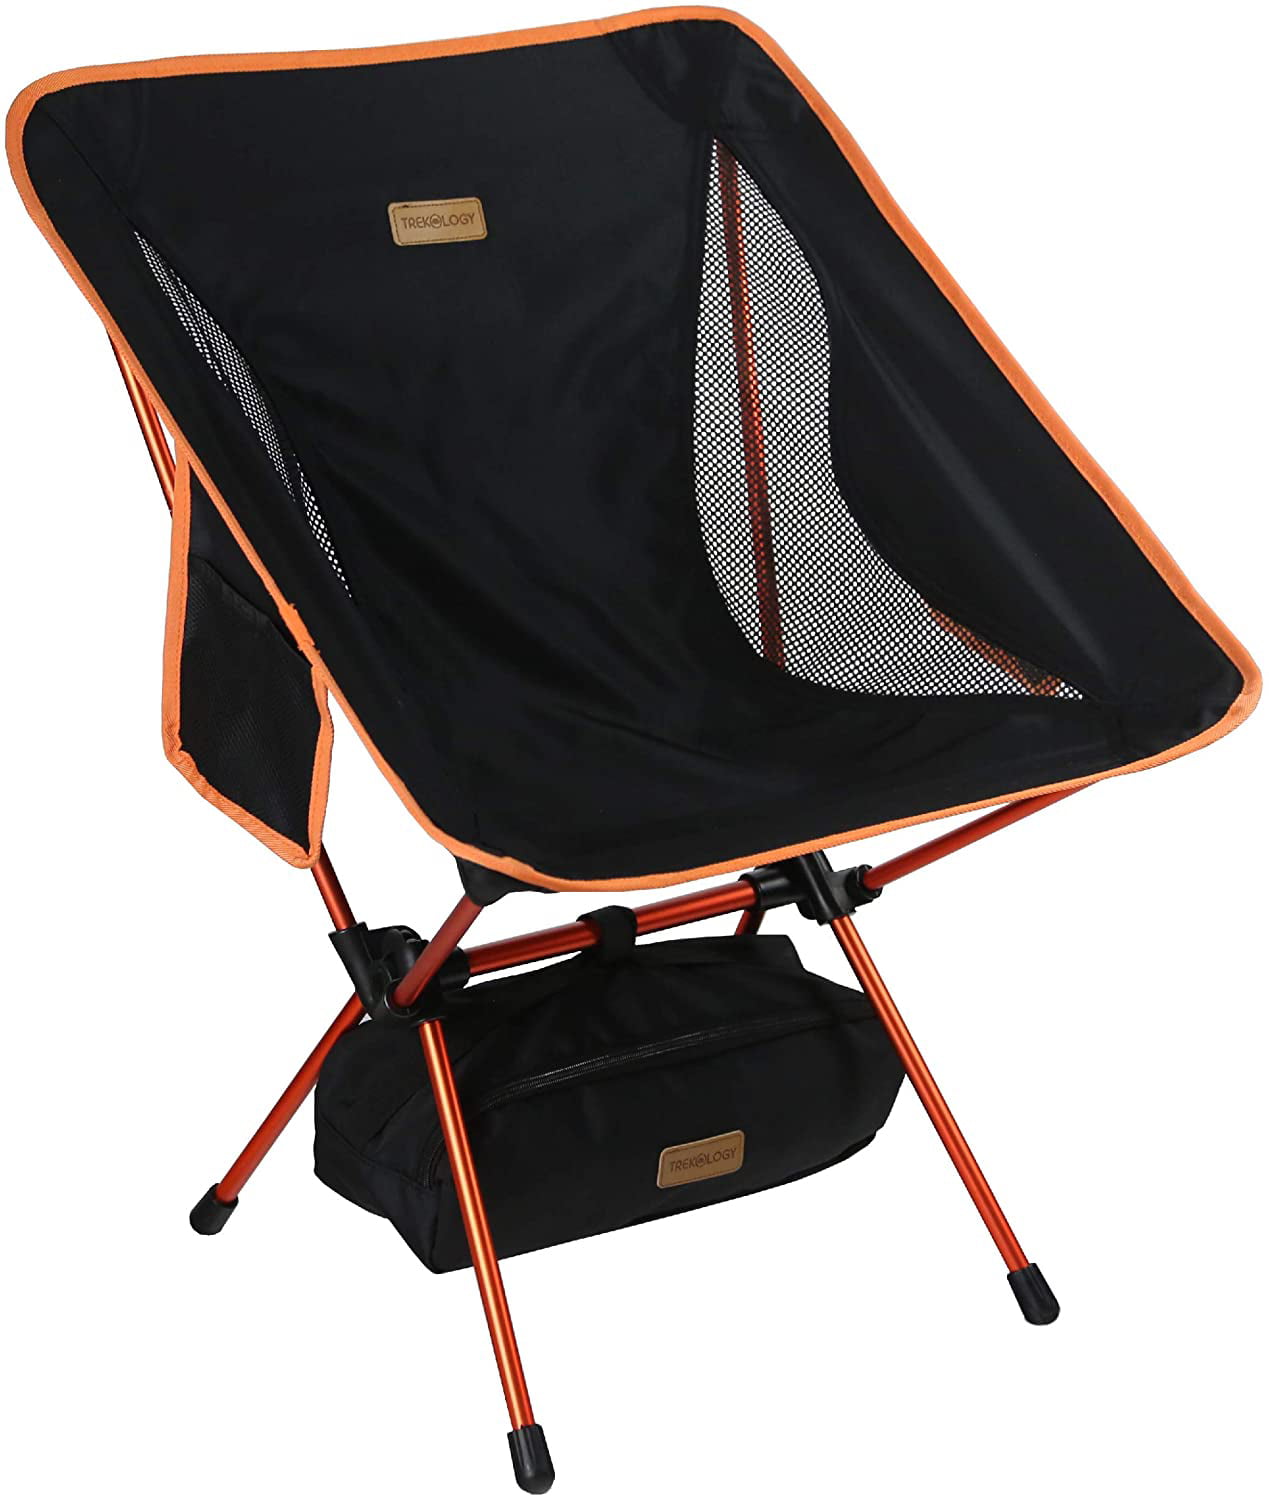 walmart camping chairs